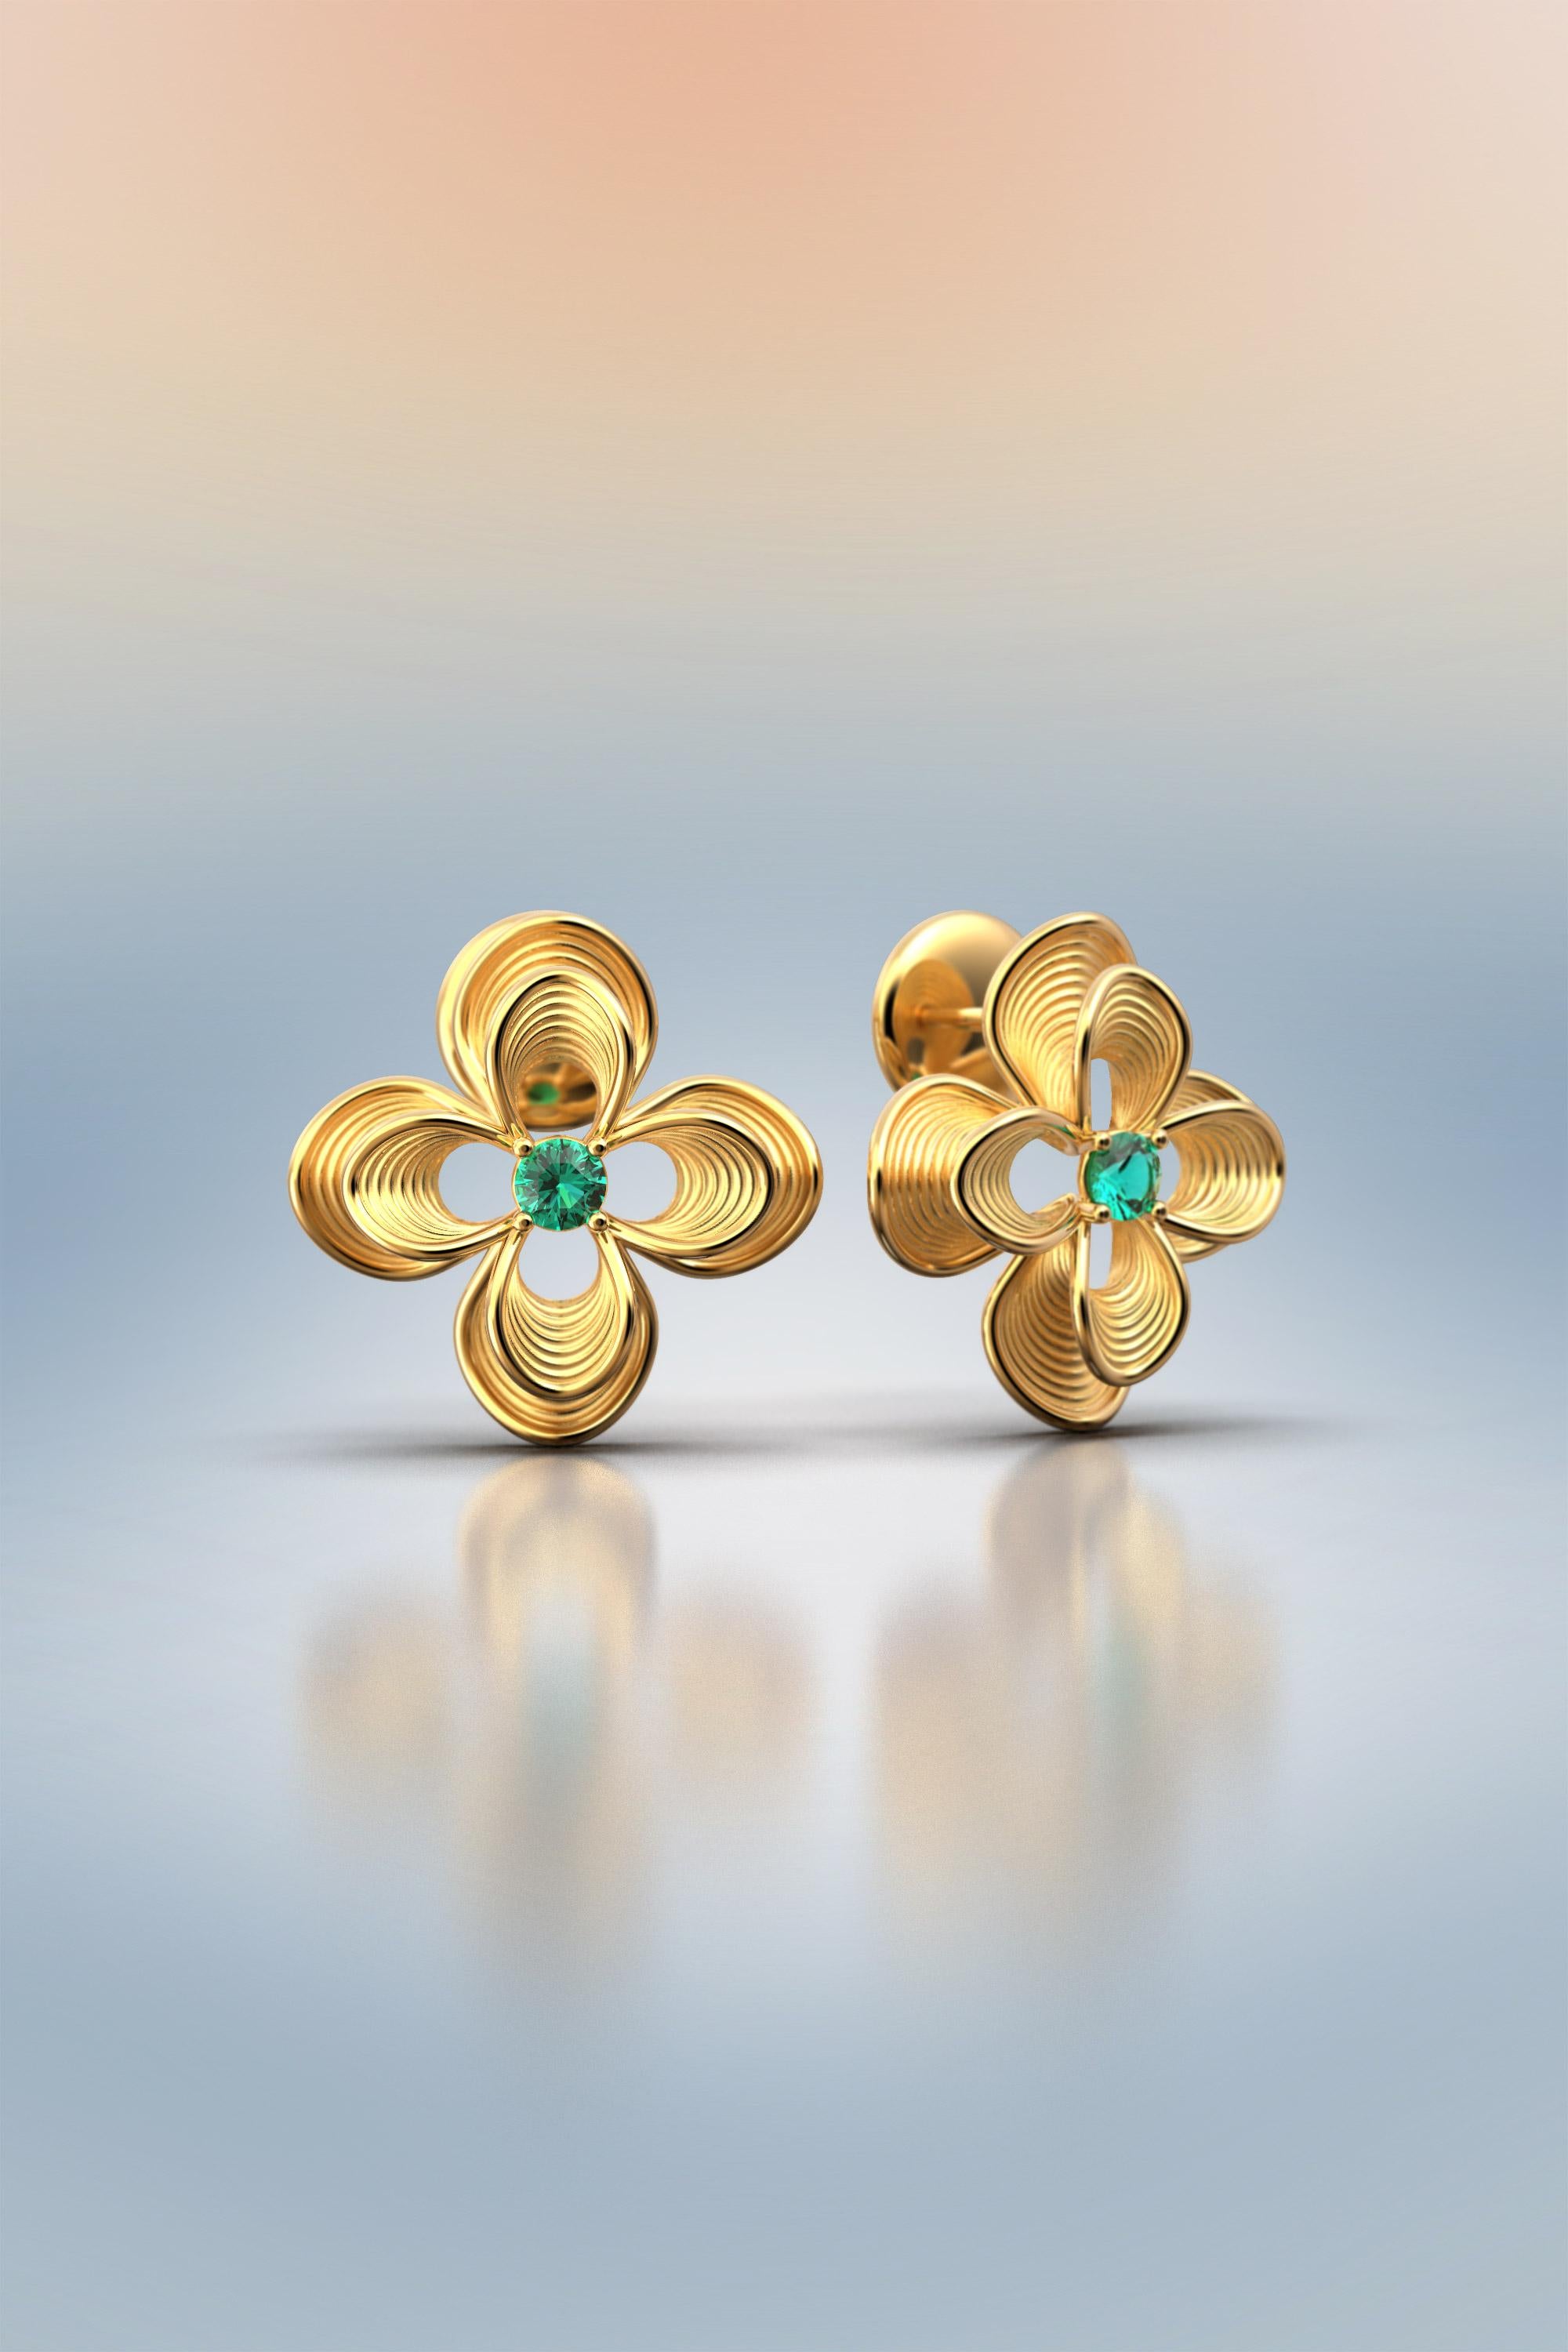 Emerald Stud Earrings in 18k Italian Gold by Oltremare Gioielli For Sale 3